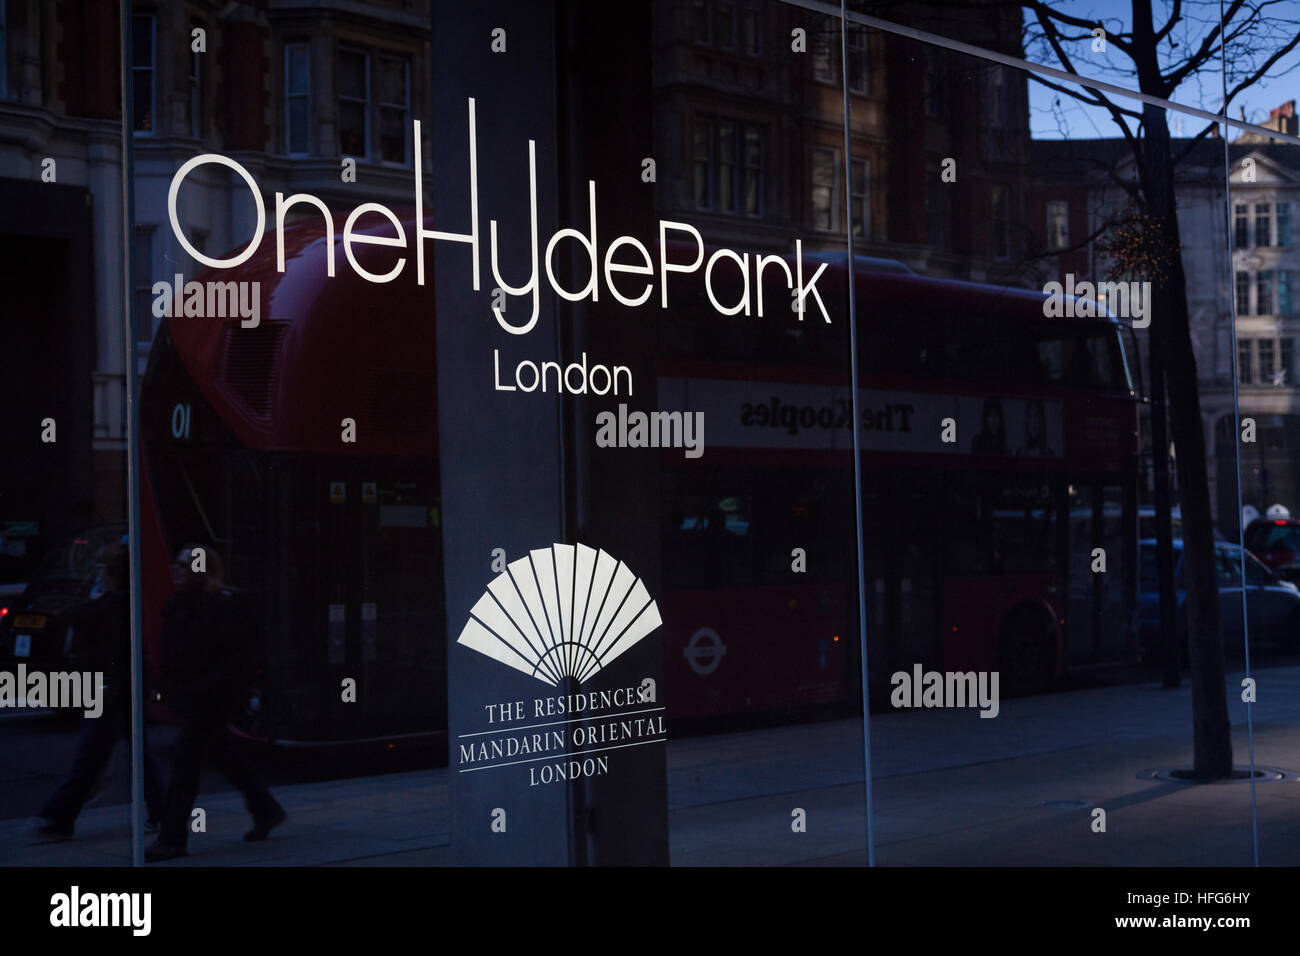 One Hyde Park, Mandarin Oriental London Stock Photo